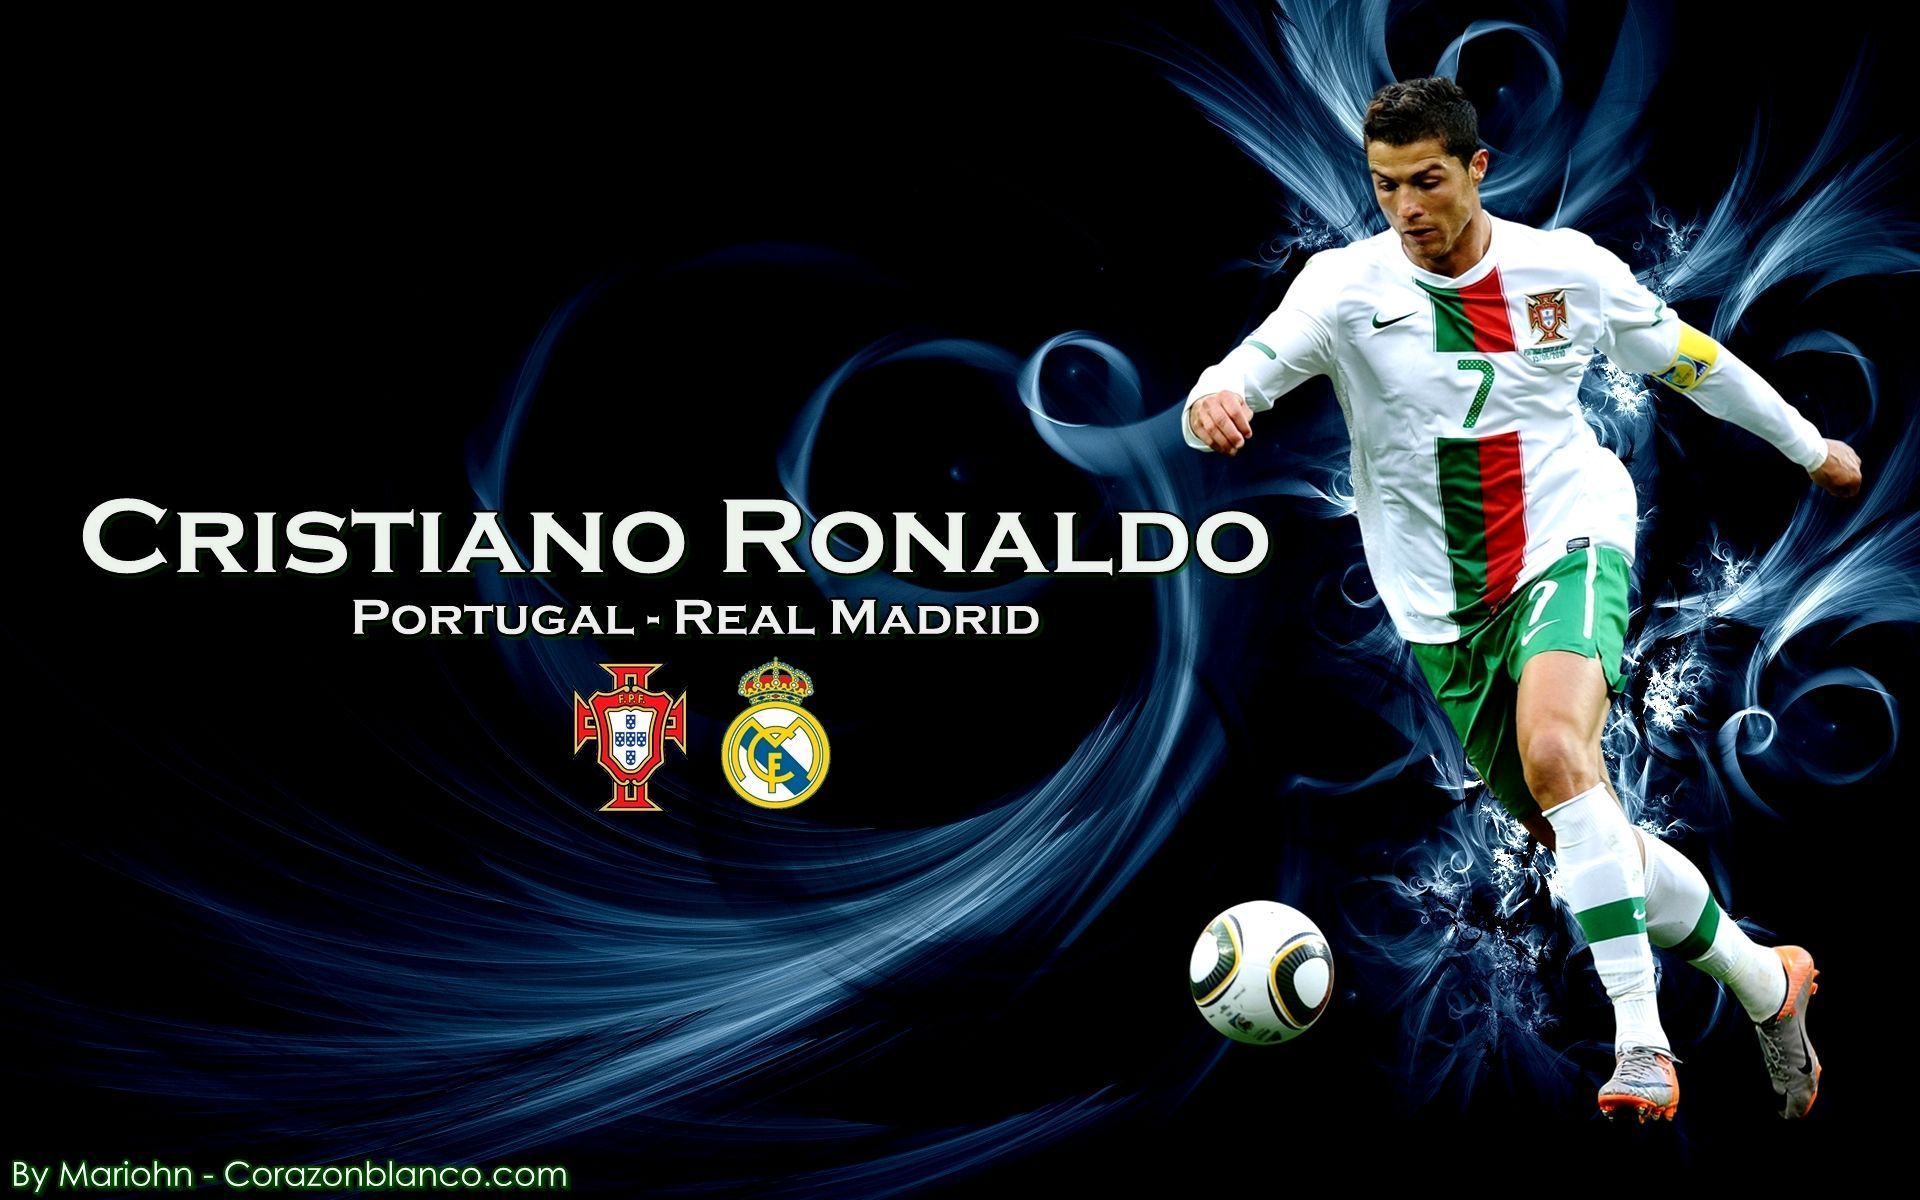 Cristiano Ronaldo Real Madrid Wallpaper | The Art Mad Wallpapers